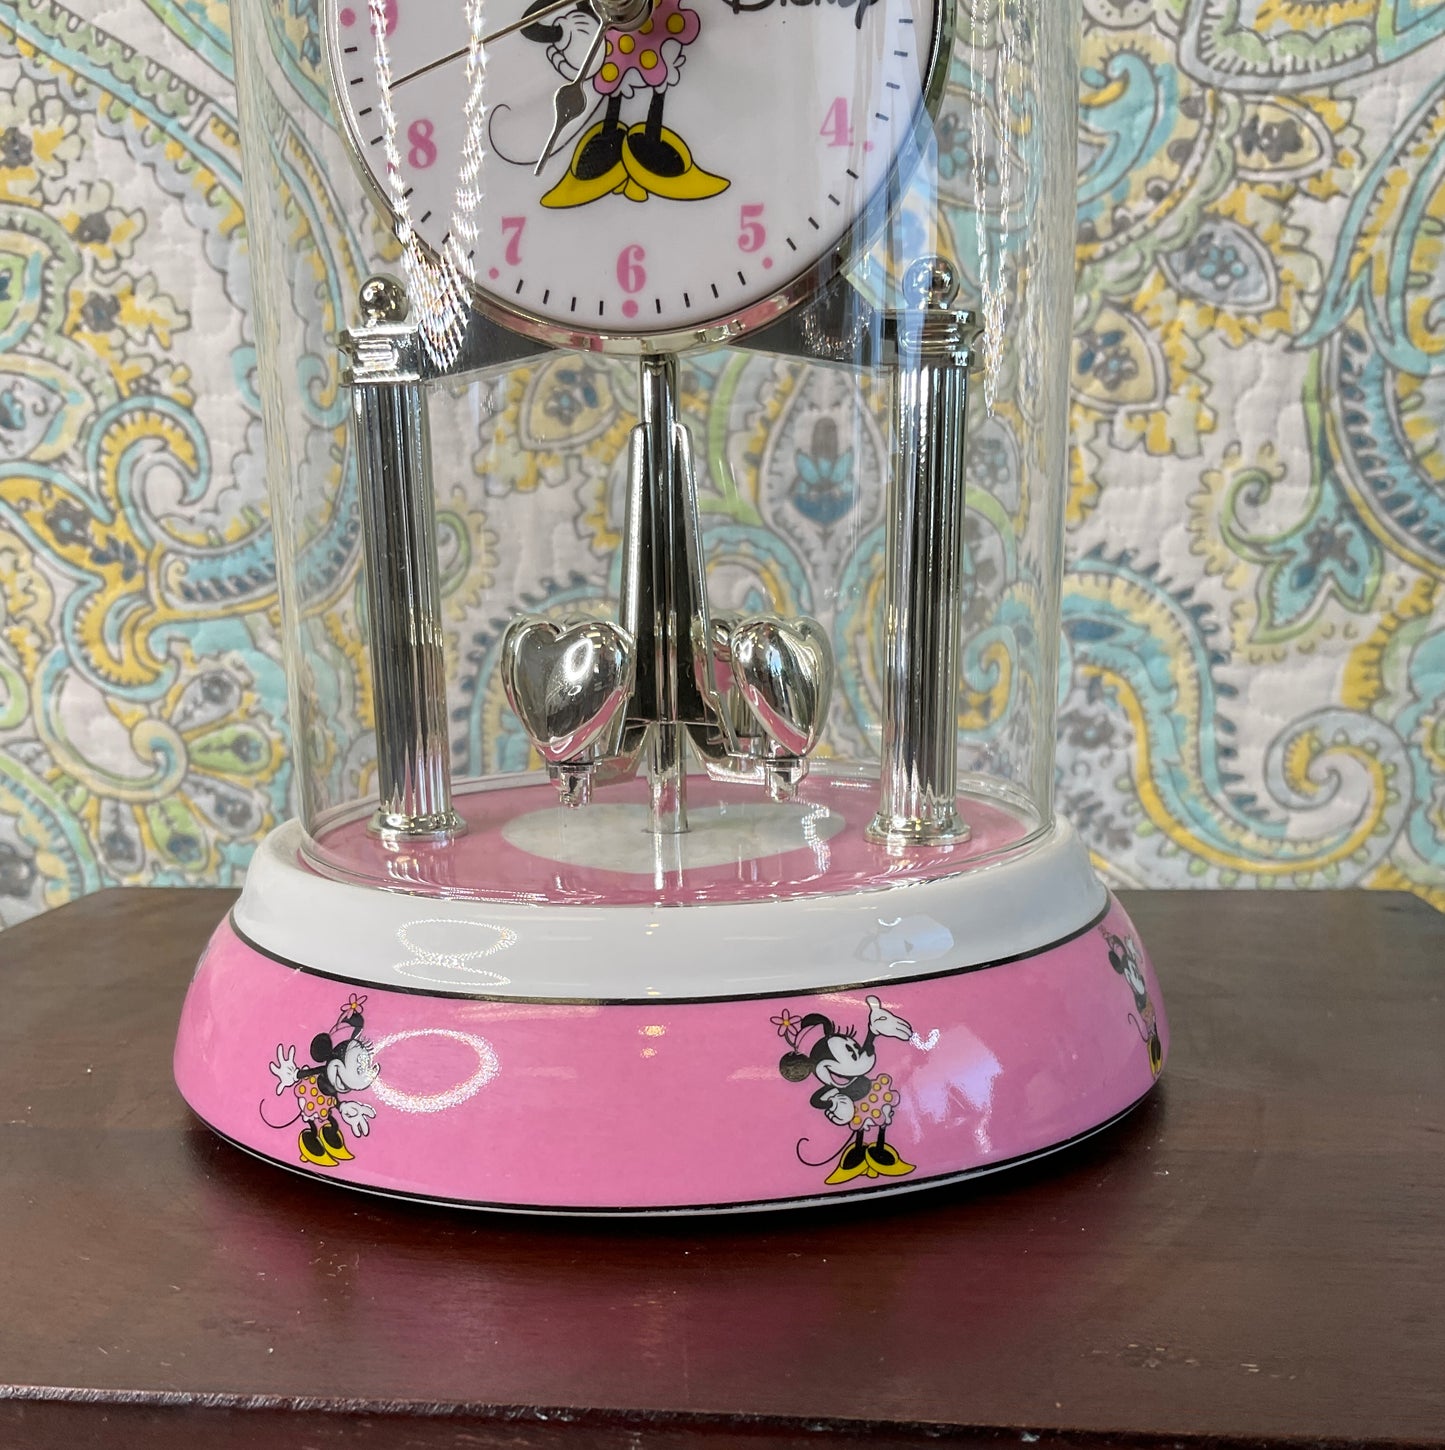 Disney's Minnie Mouse Anniversary Clock